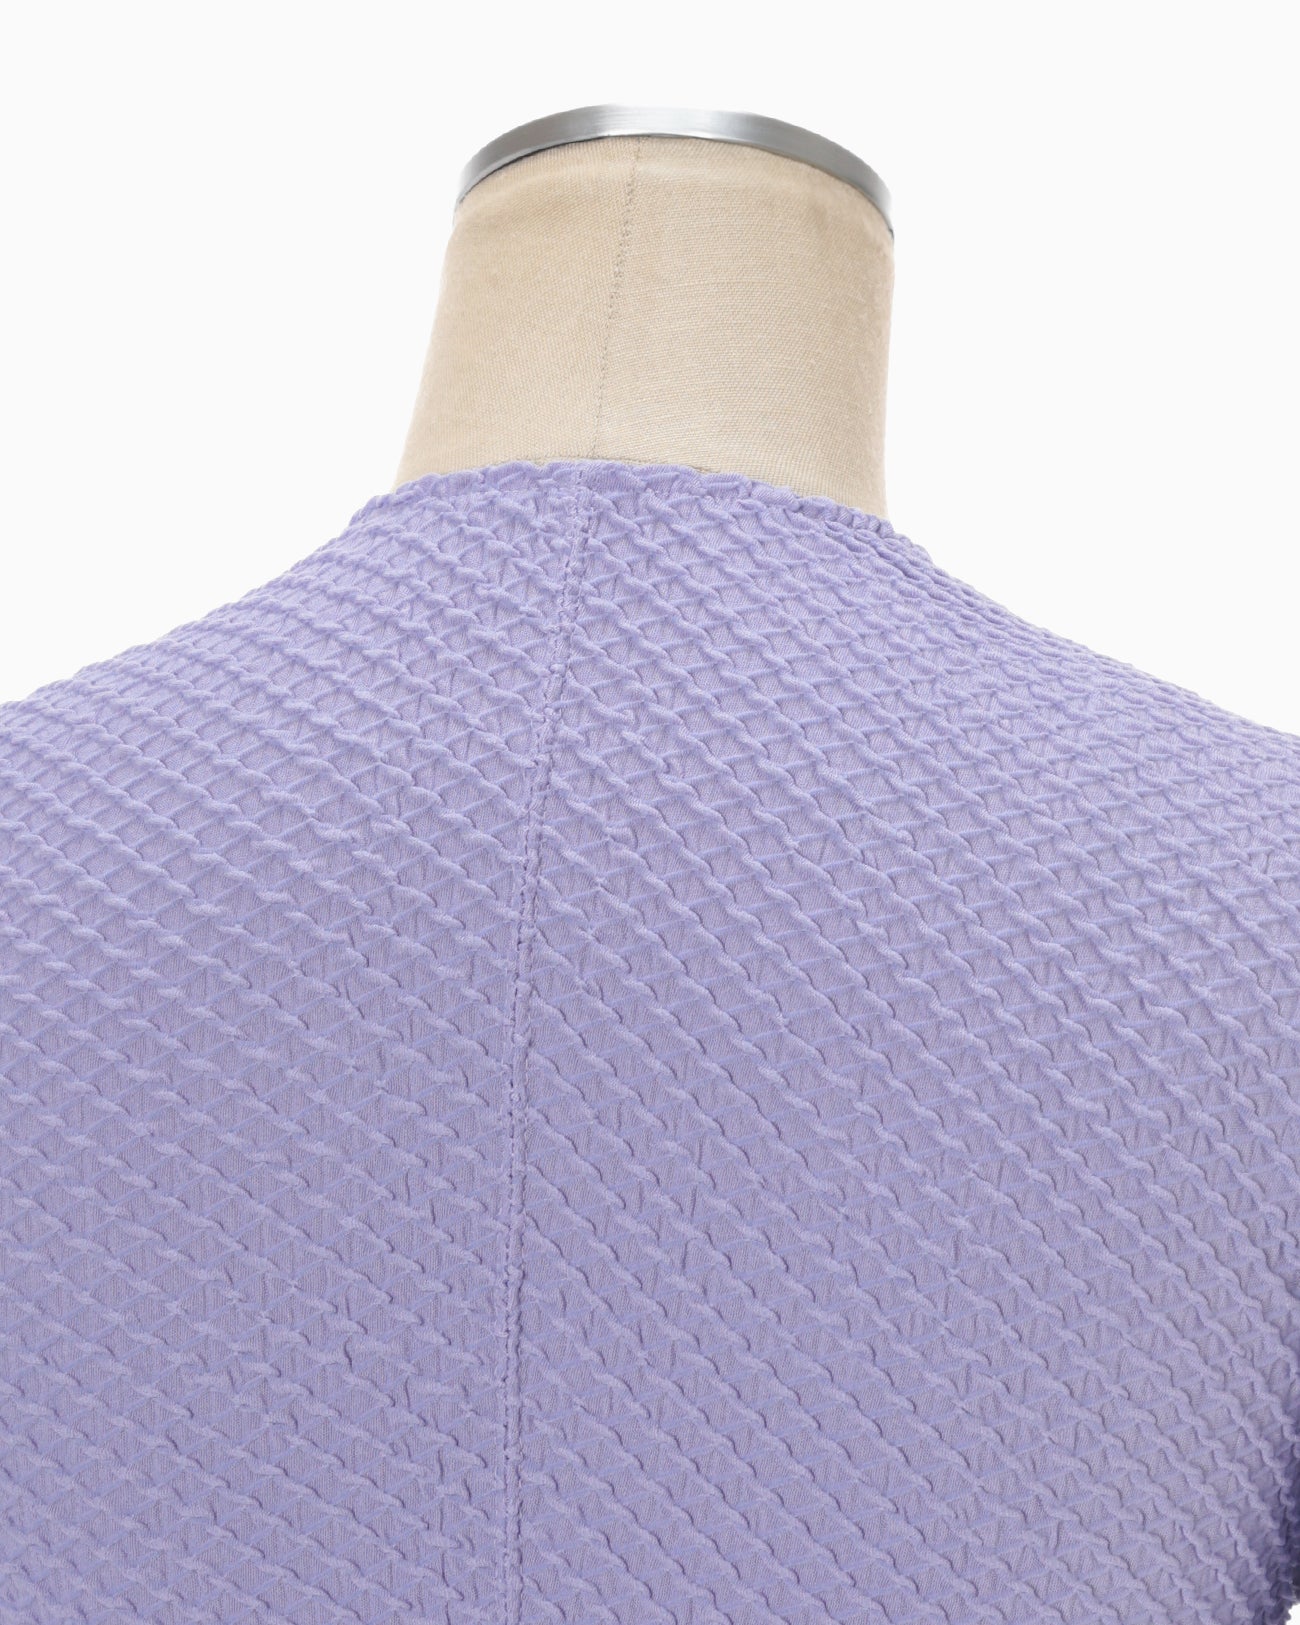 Shirring Jersey Jacquard Top - purple